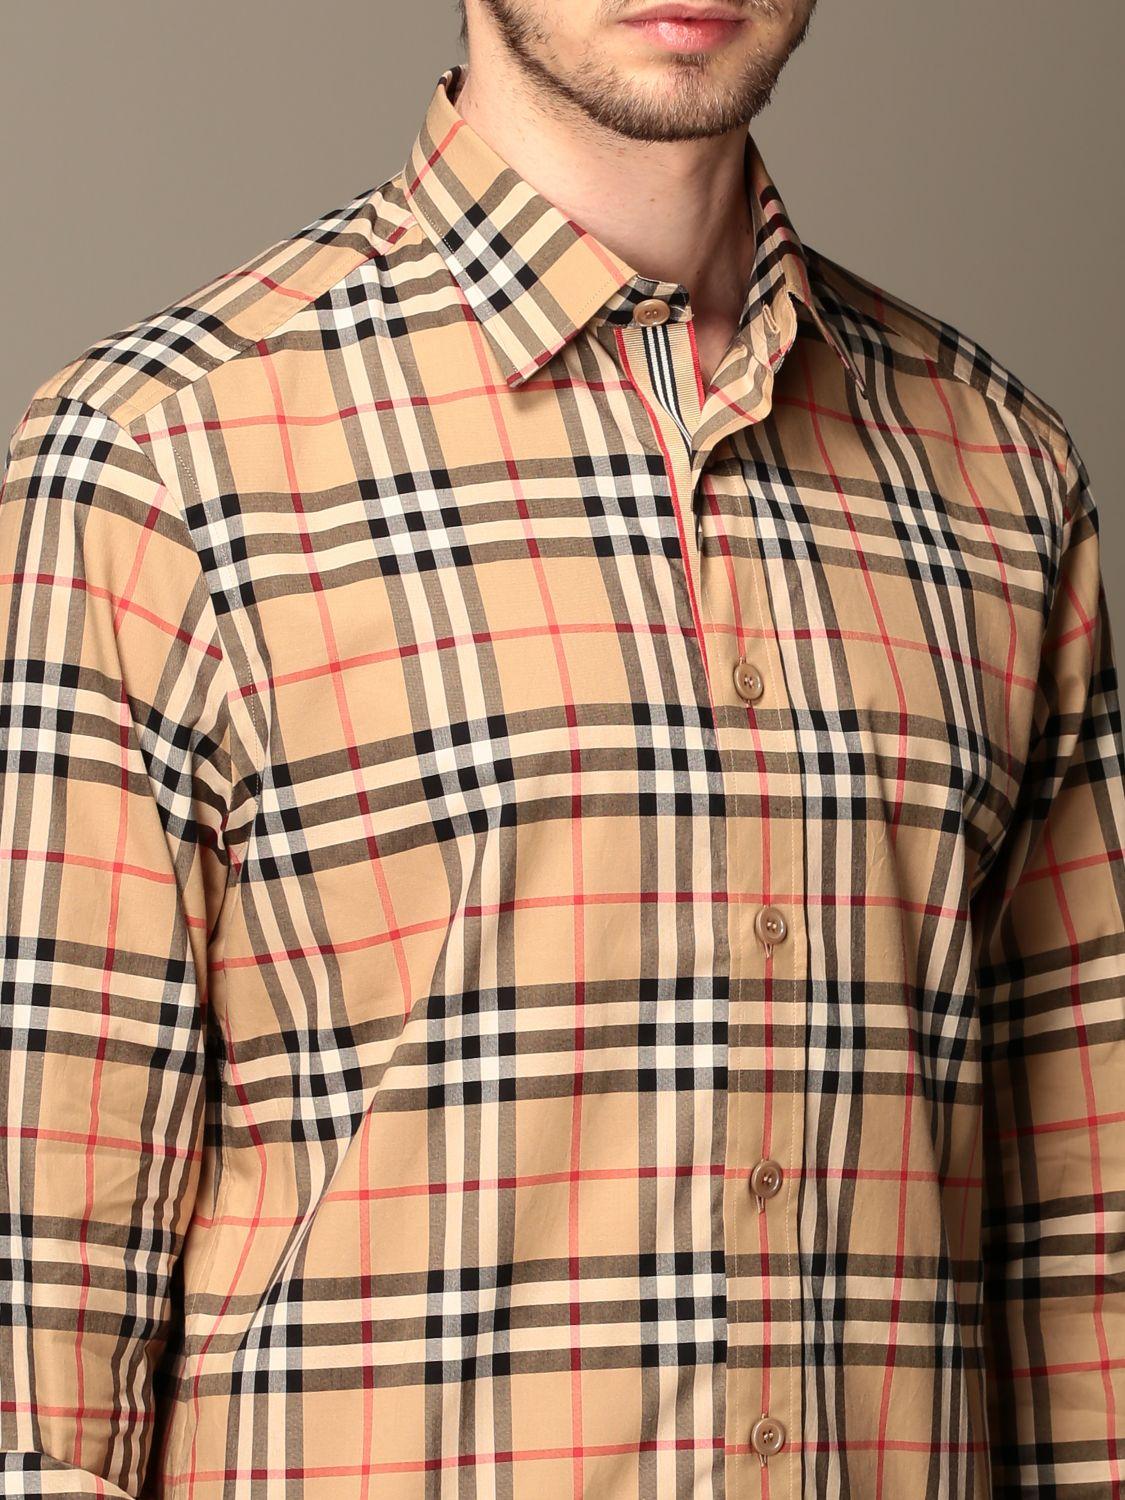 Burberry Shirt for Men - Lyst